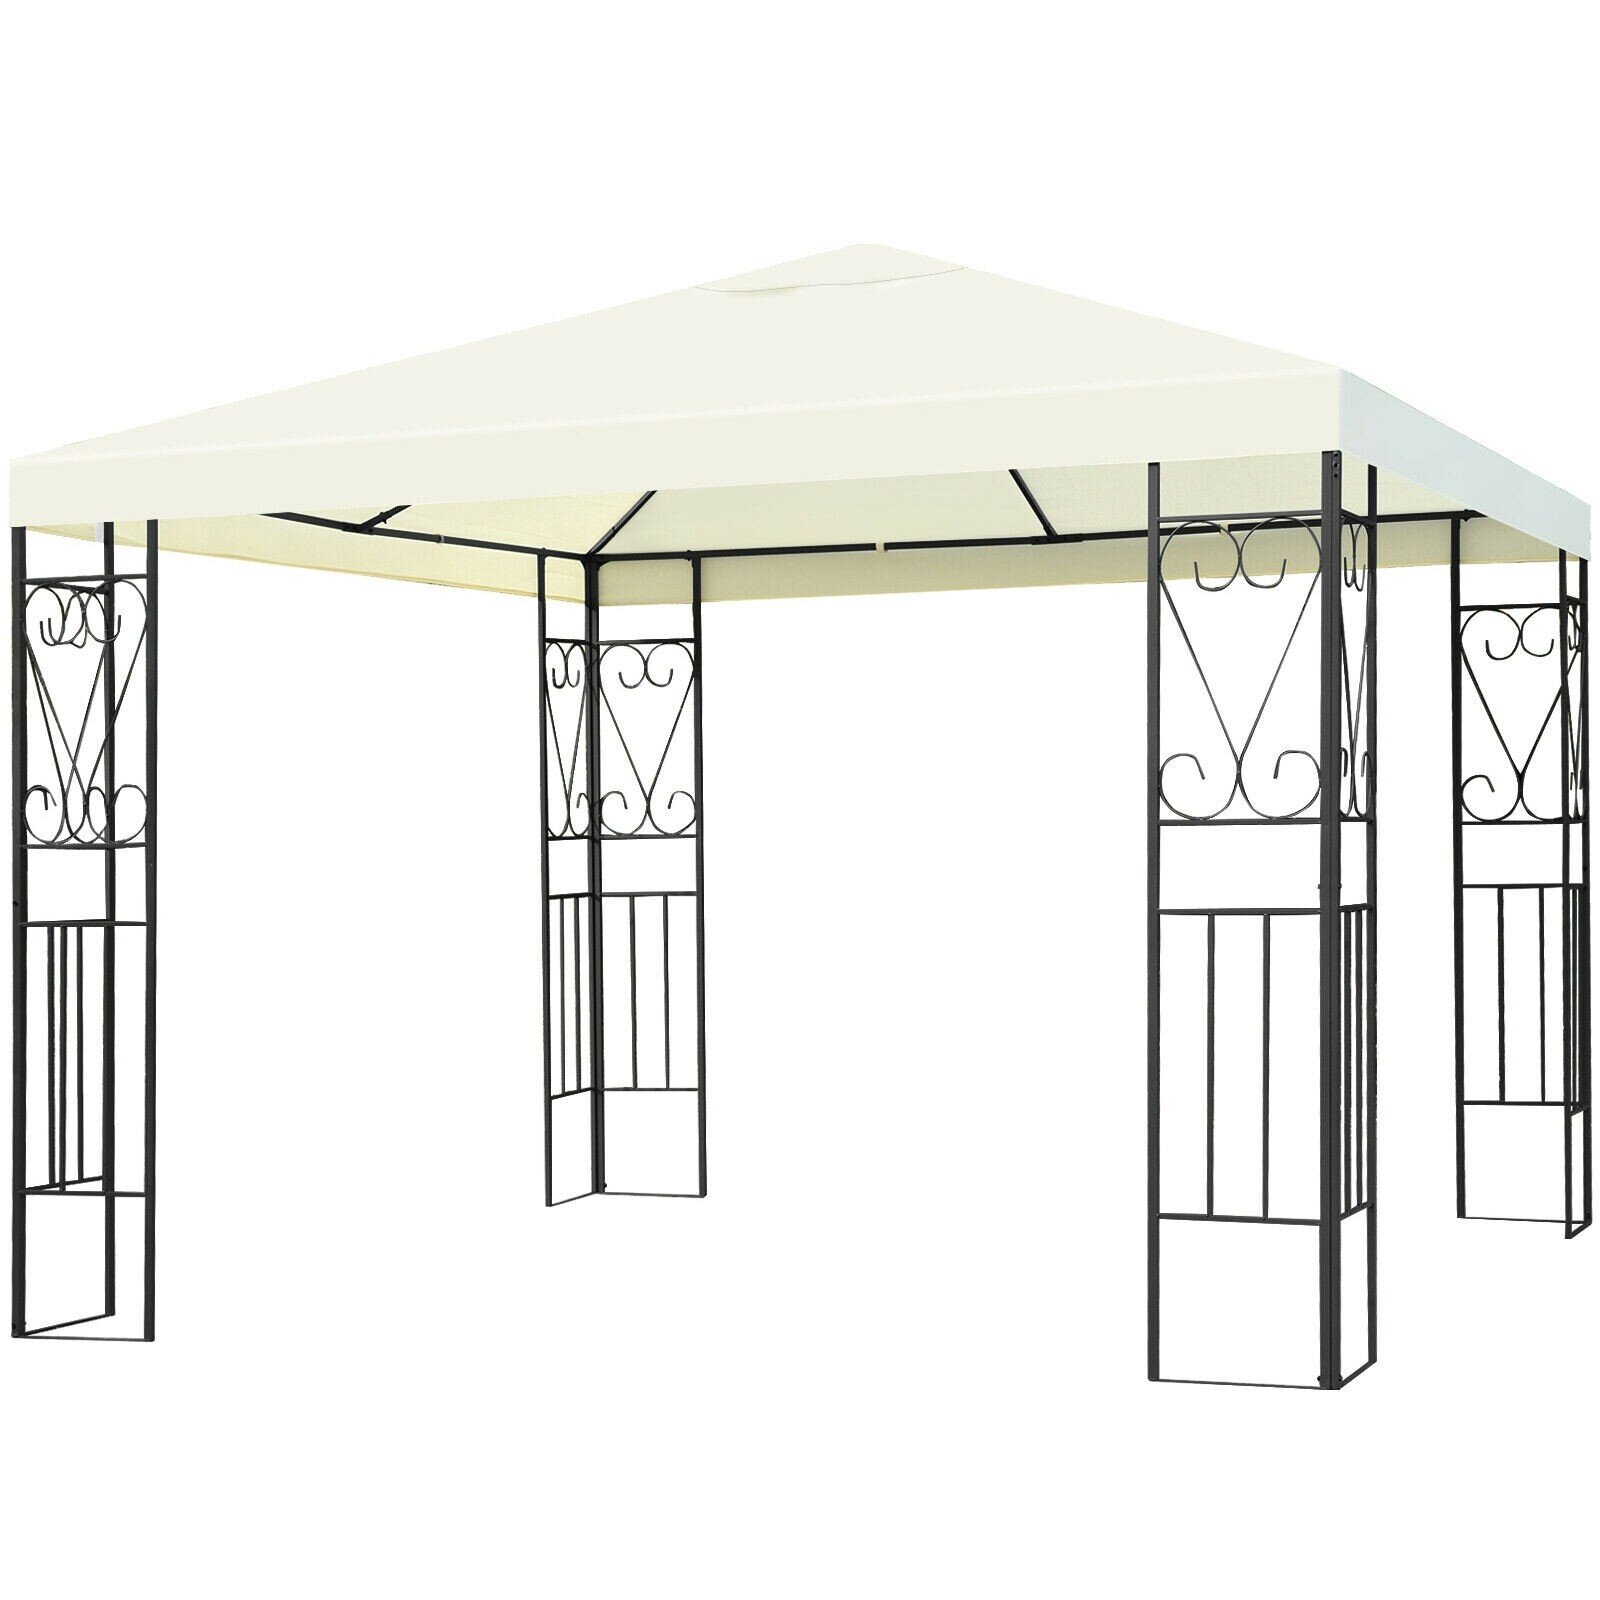 Steel Frame Gazebo Tent w/ 100 Square Feet of Shade for Patio Outdoor Gazebo Canopy Shelter w/ Netting Backyard Tangkula 10x10 Feet Patio Gazebo Poolside 